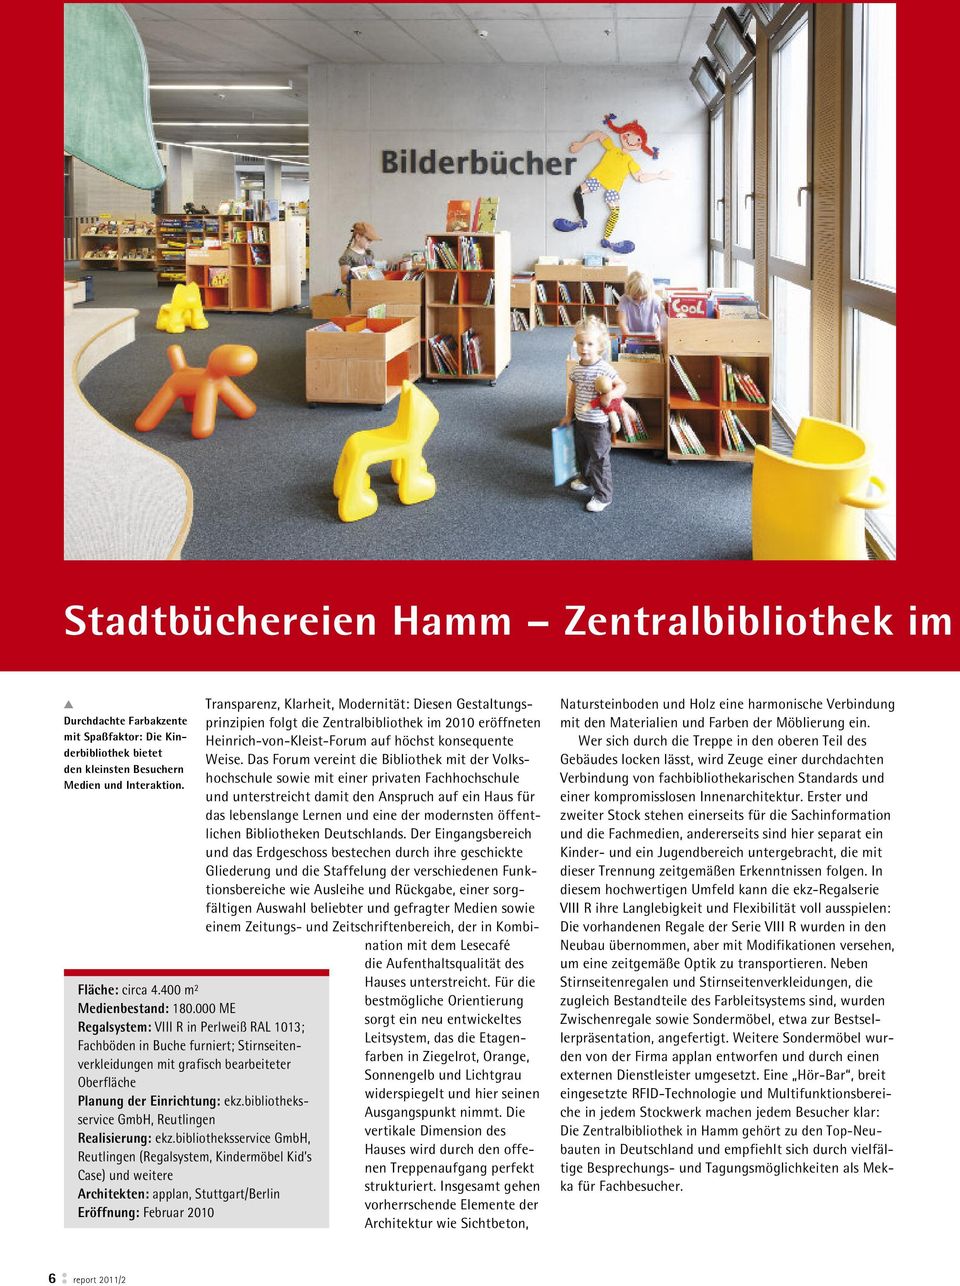 bibliotheksservice GmbH, Reutlingen Realisierung: ekz.